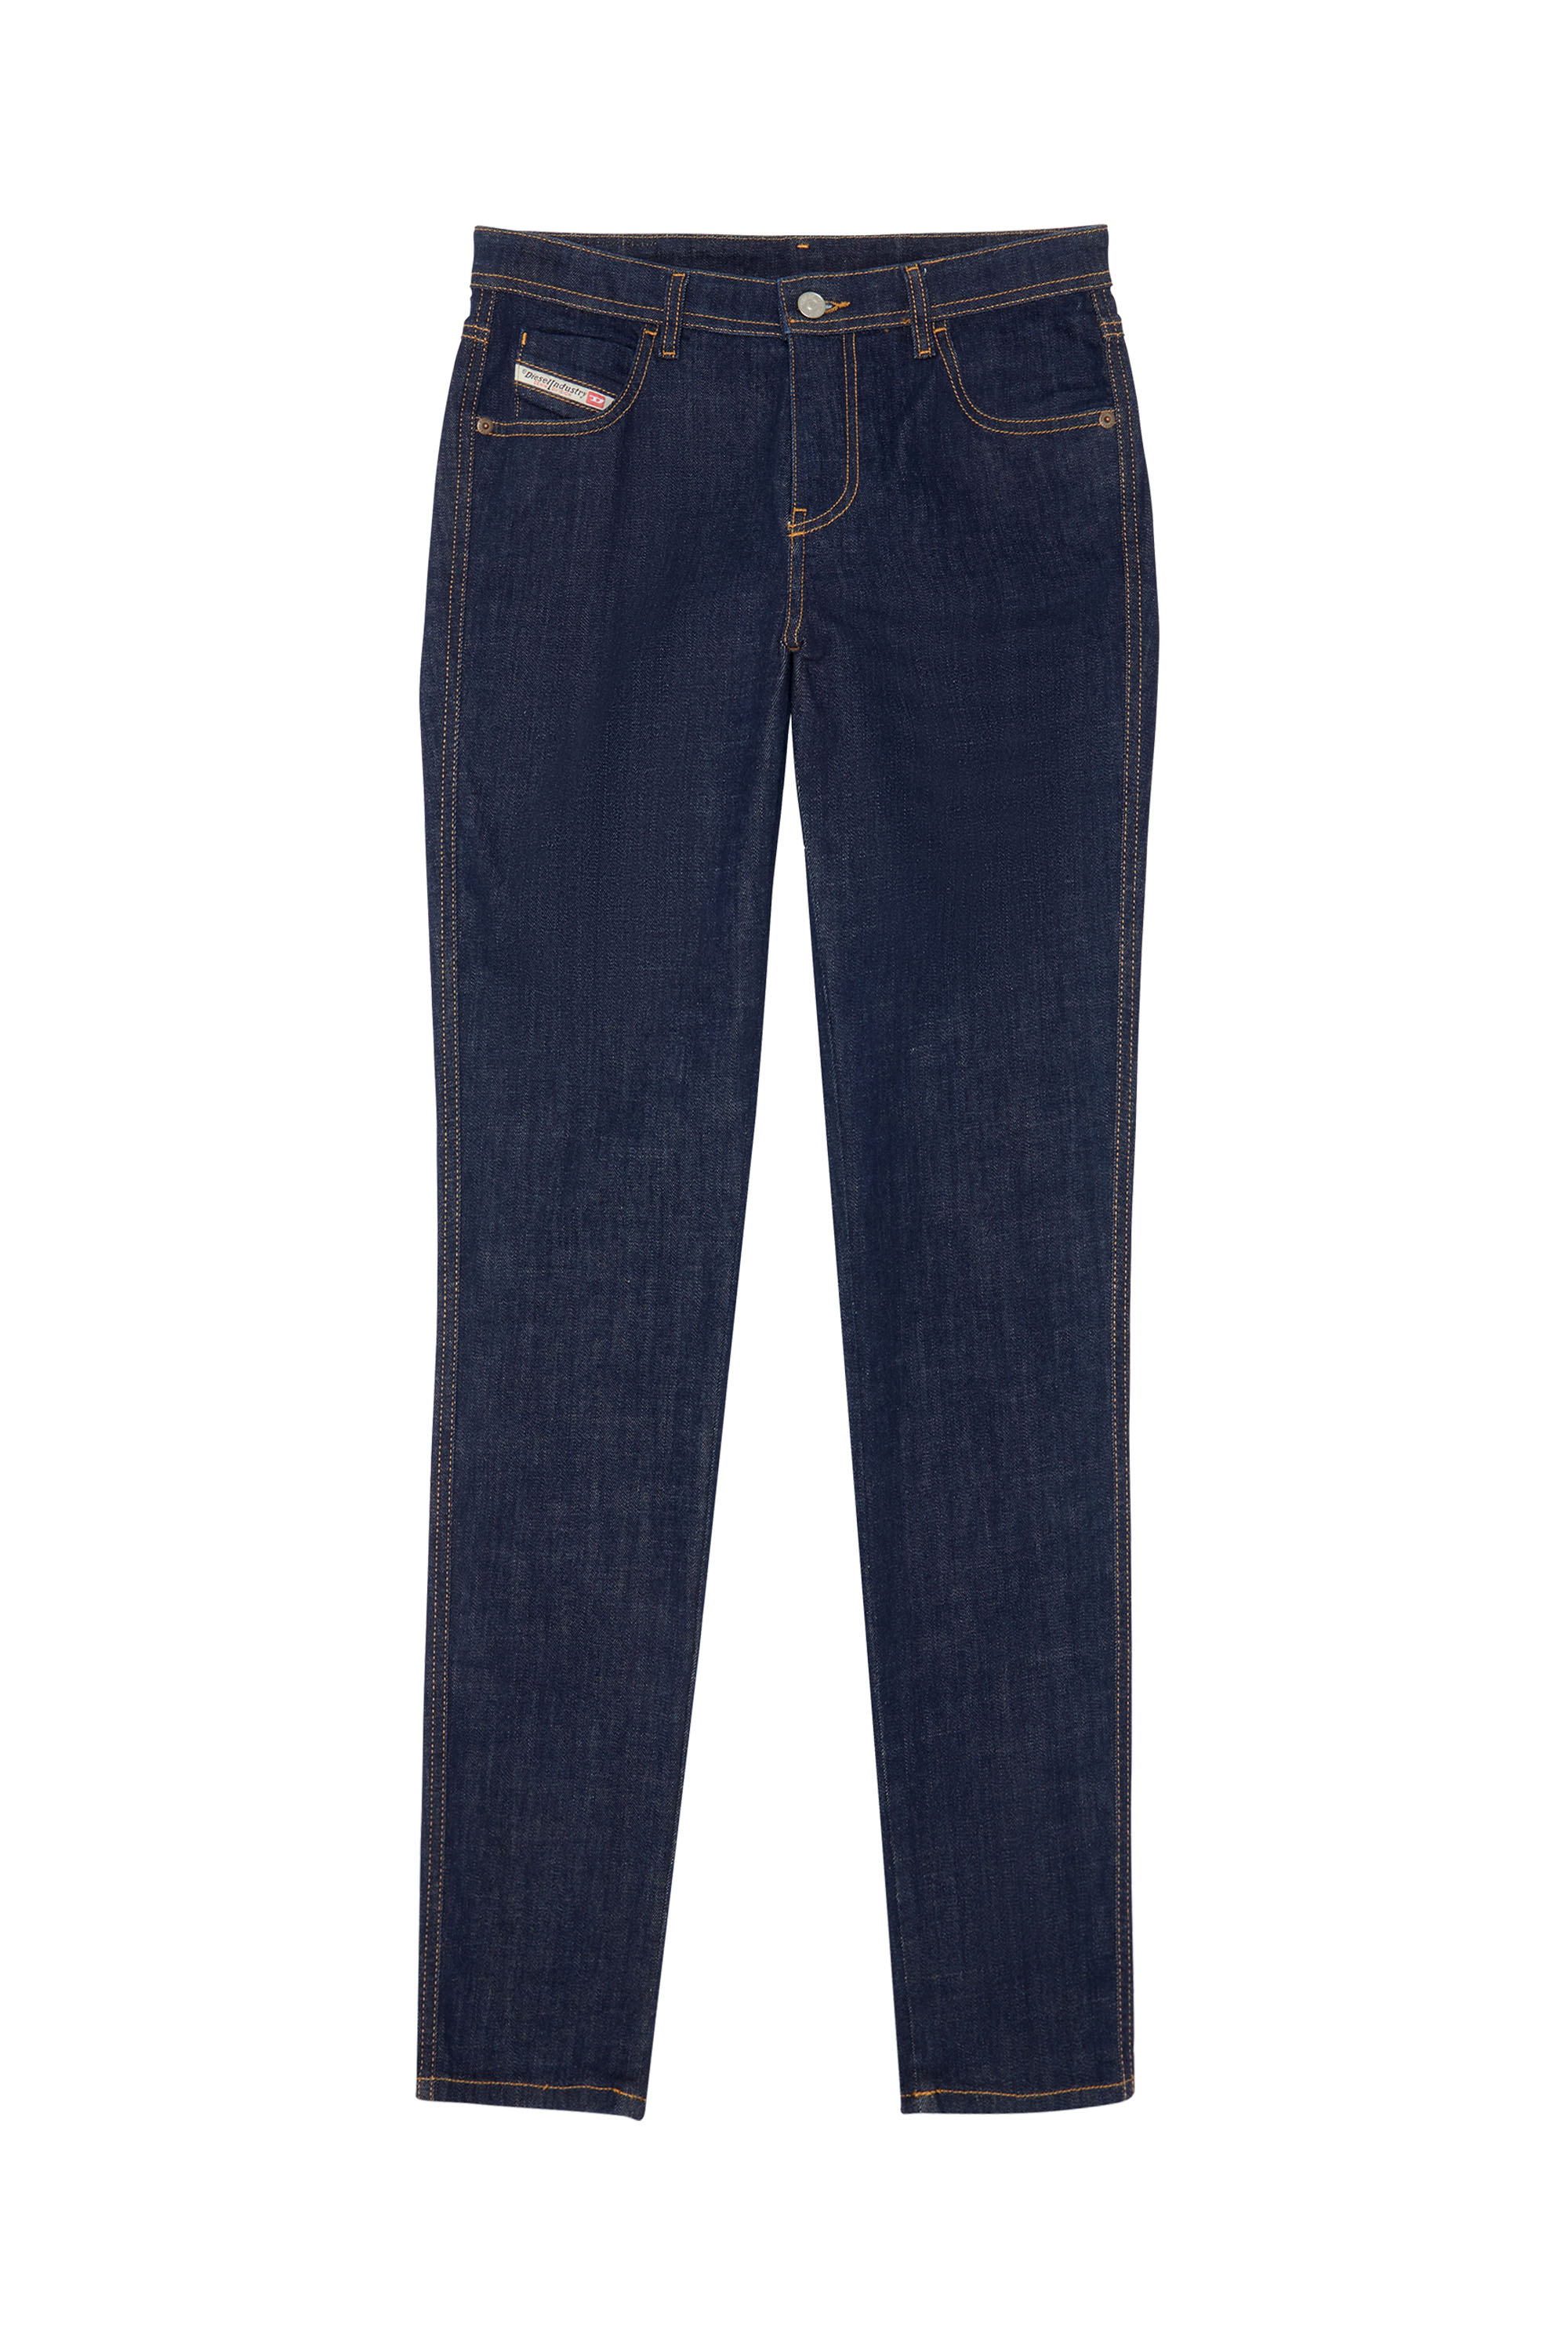 2015 Babhila Z9C17 Skinny Jeans, Dunkelblau - Jeans